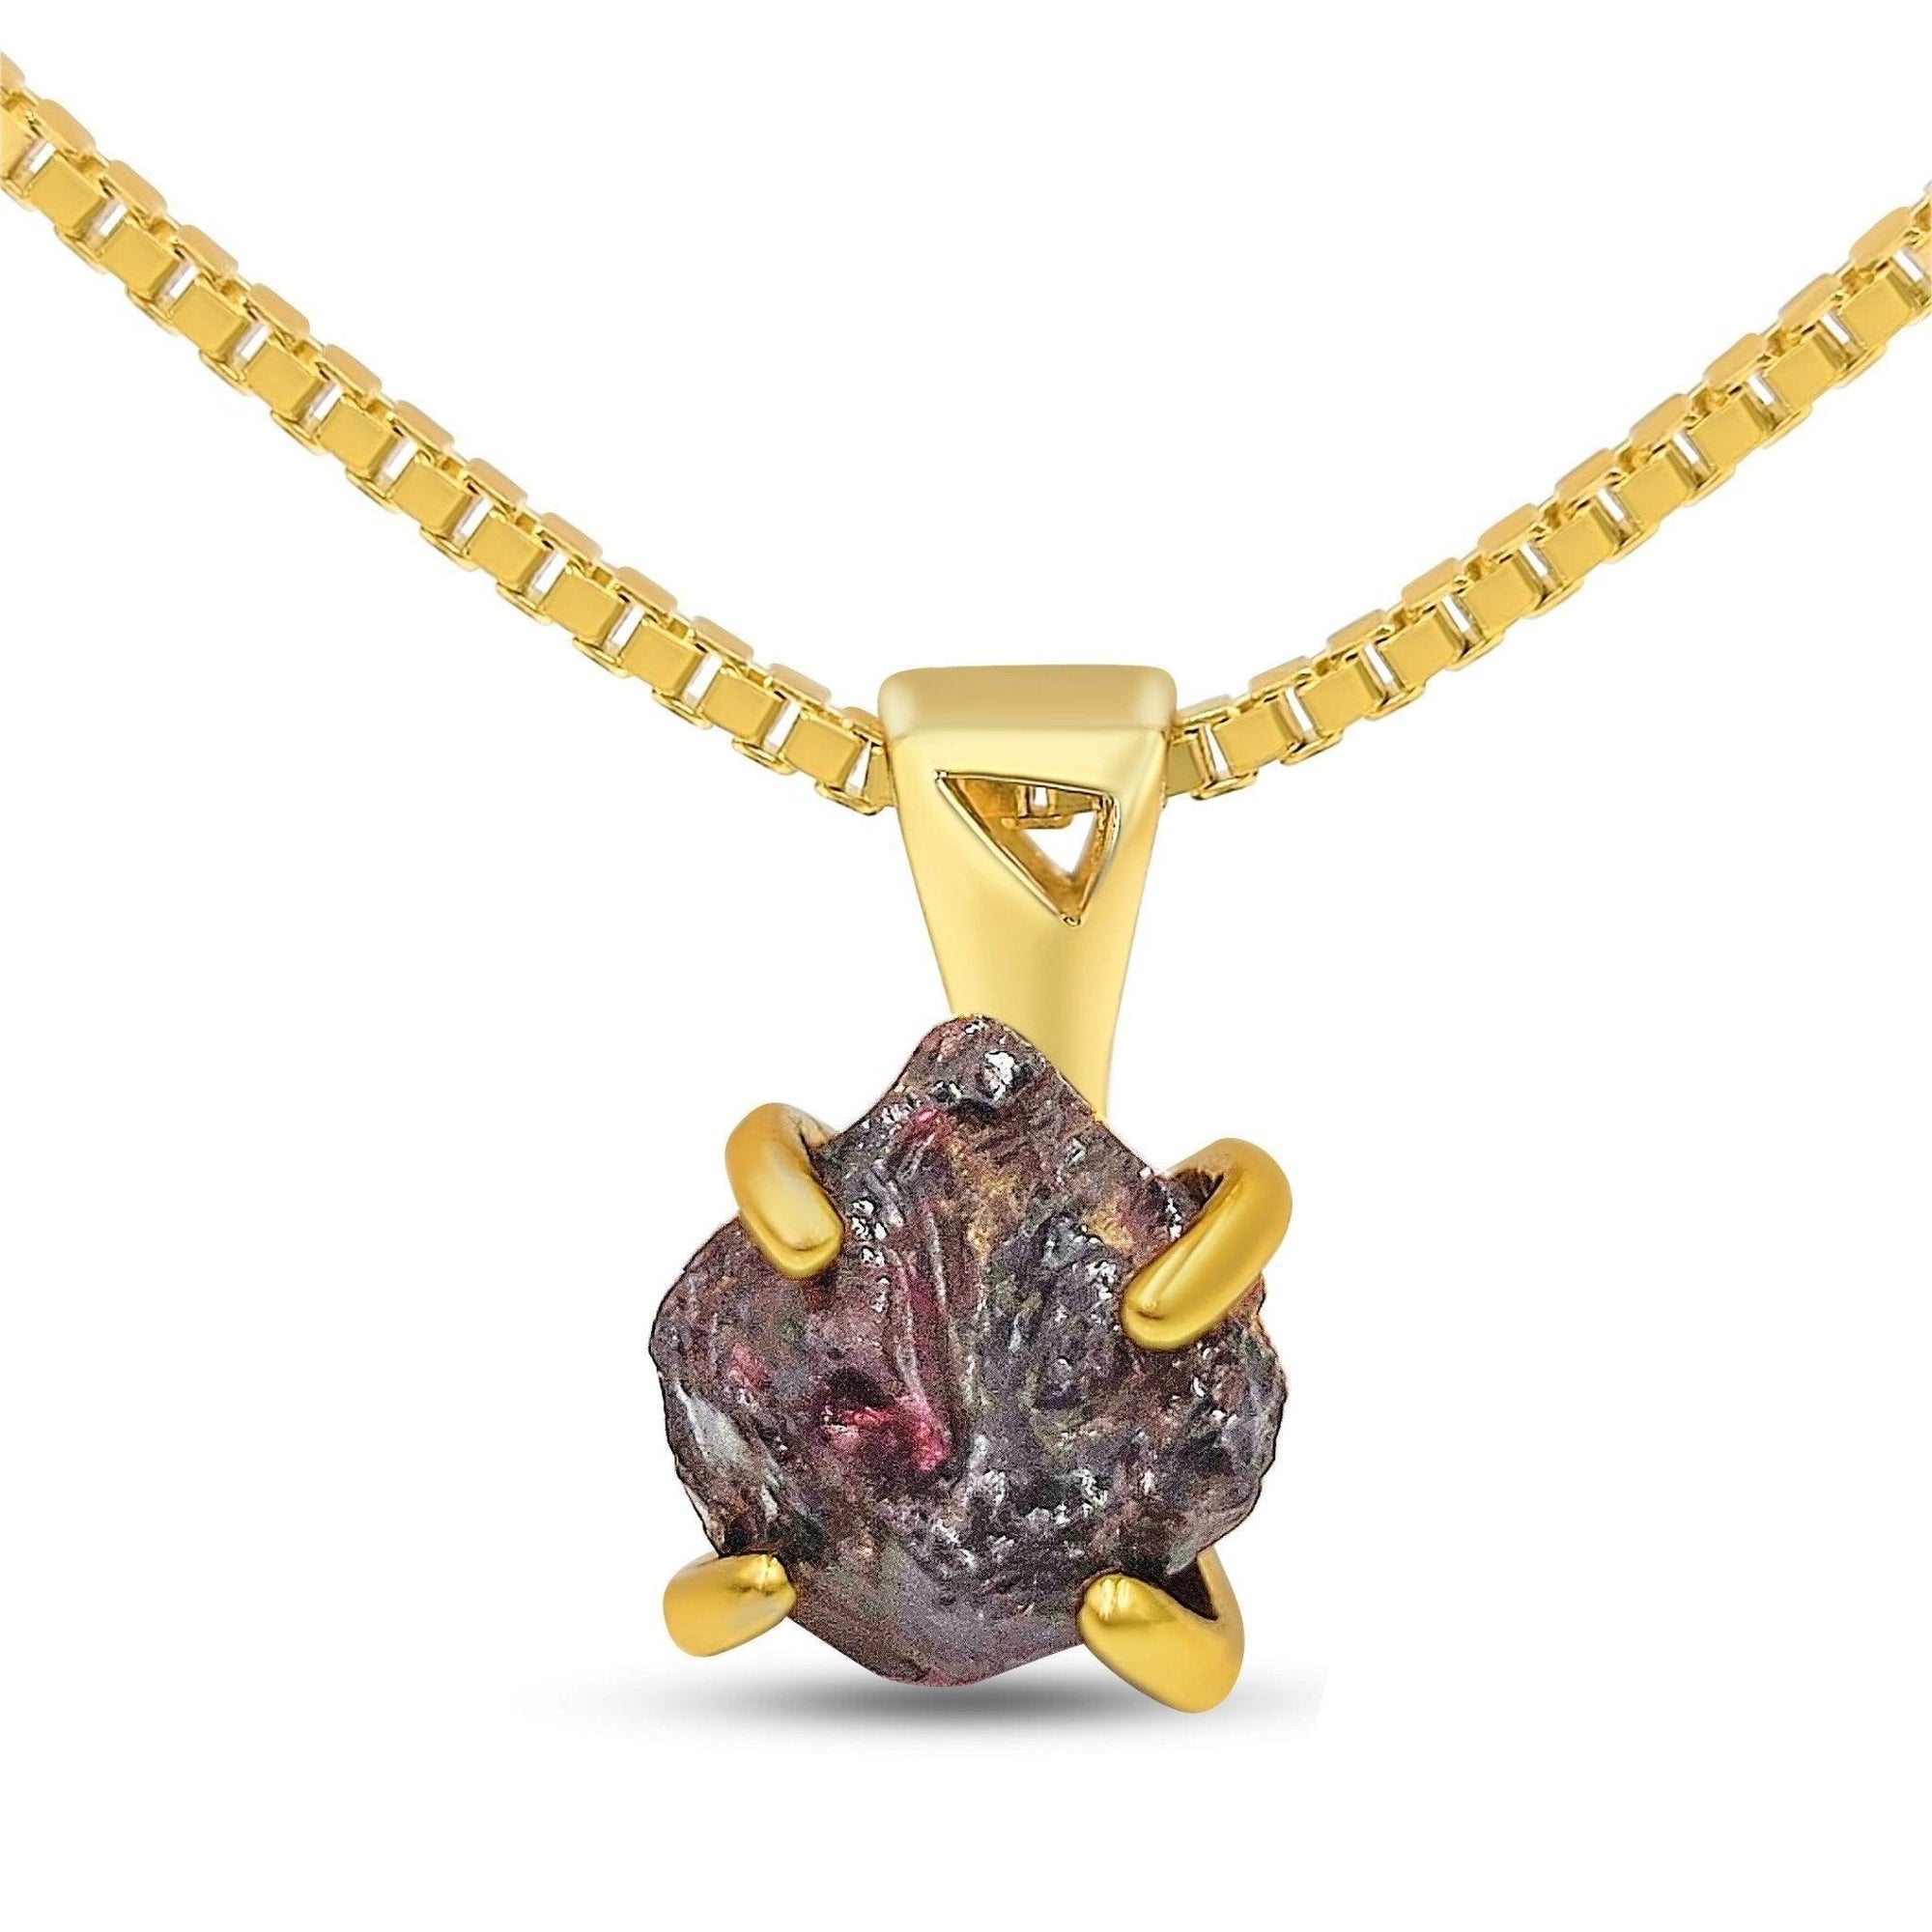 Real Raw Garnet Pendant Necklace - Uniquelan Jewelry